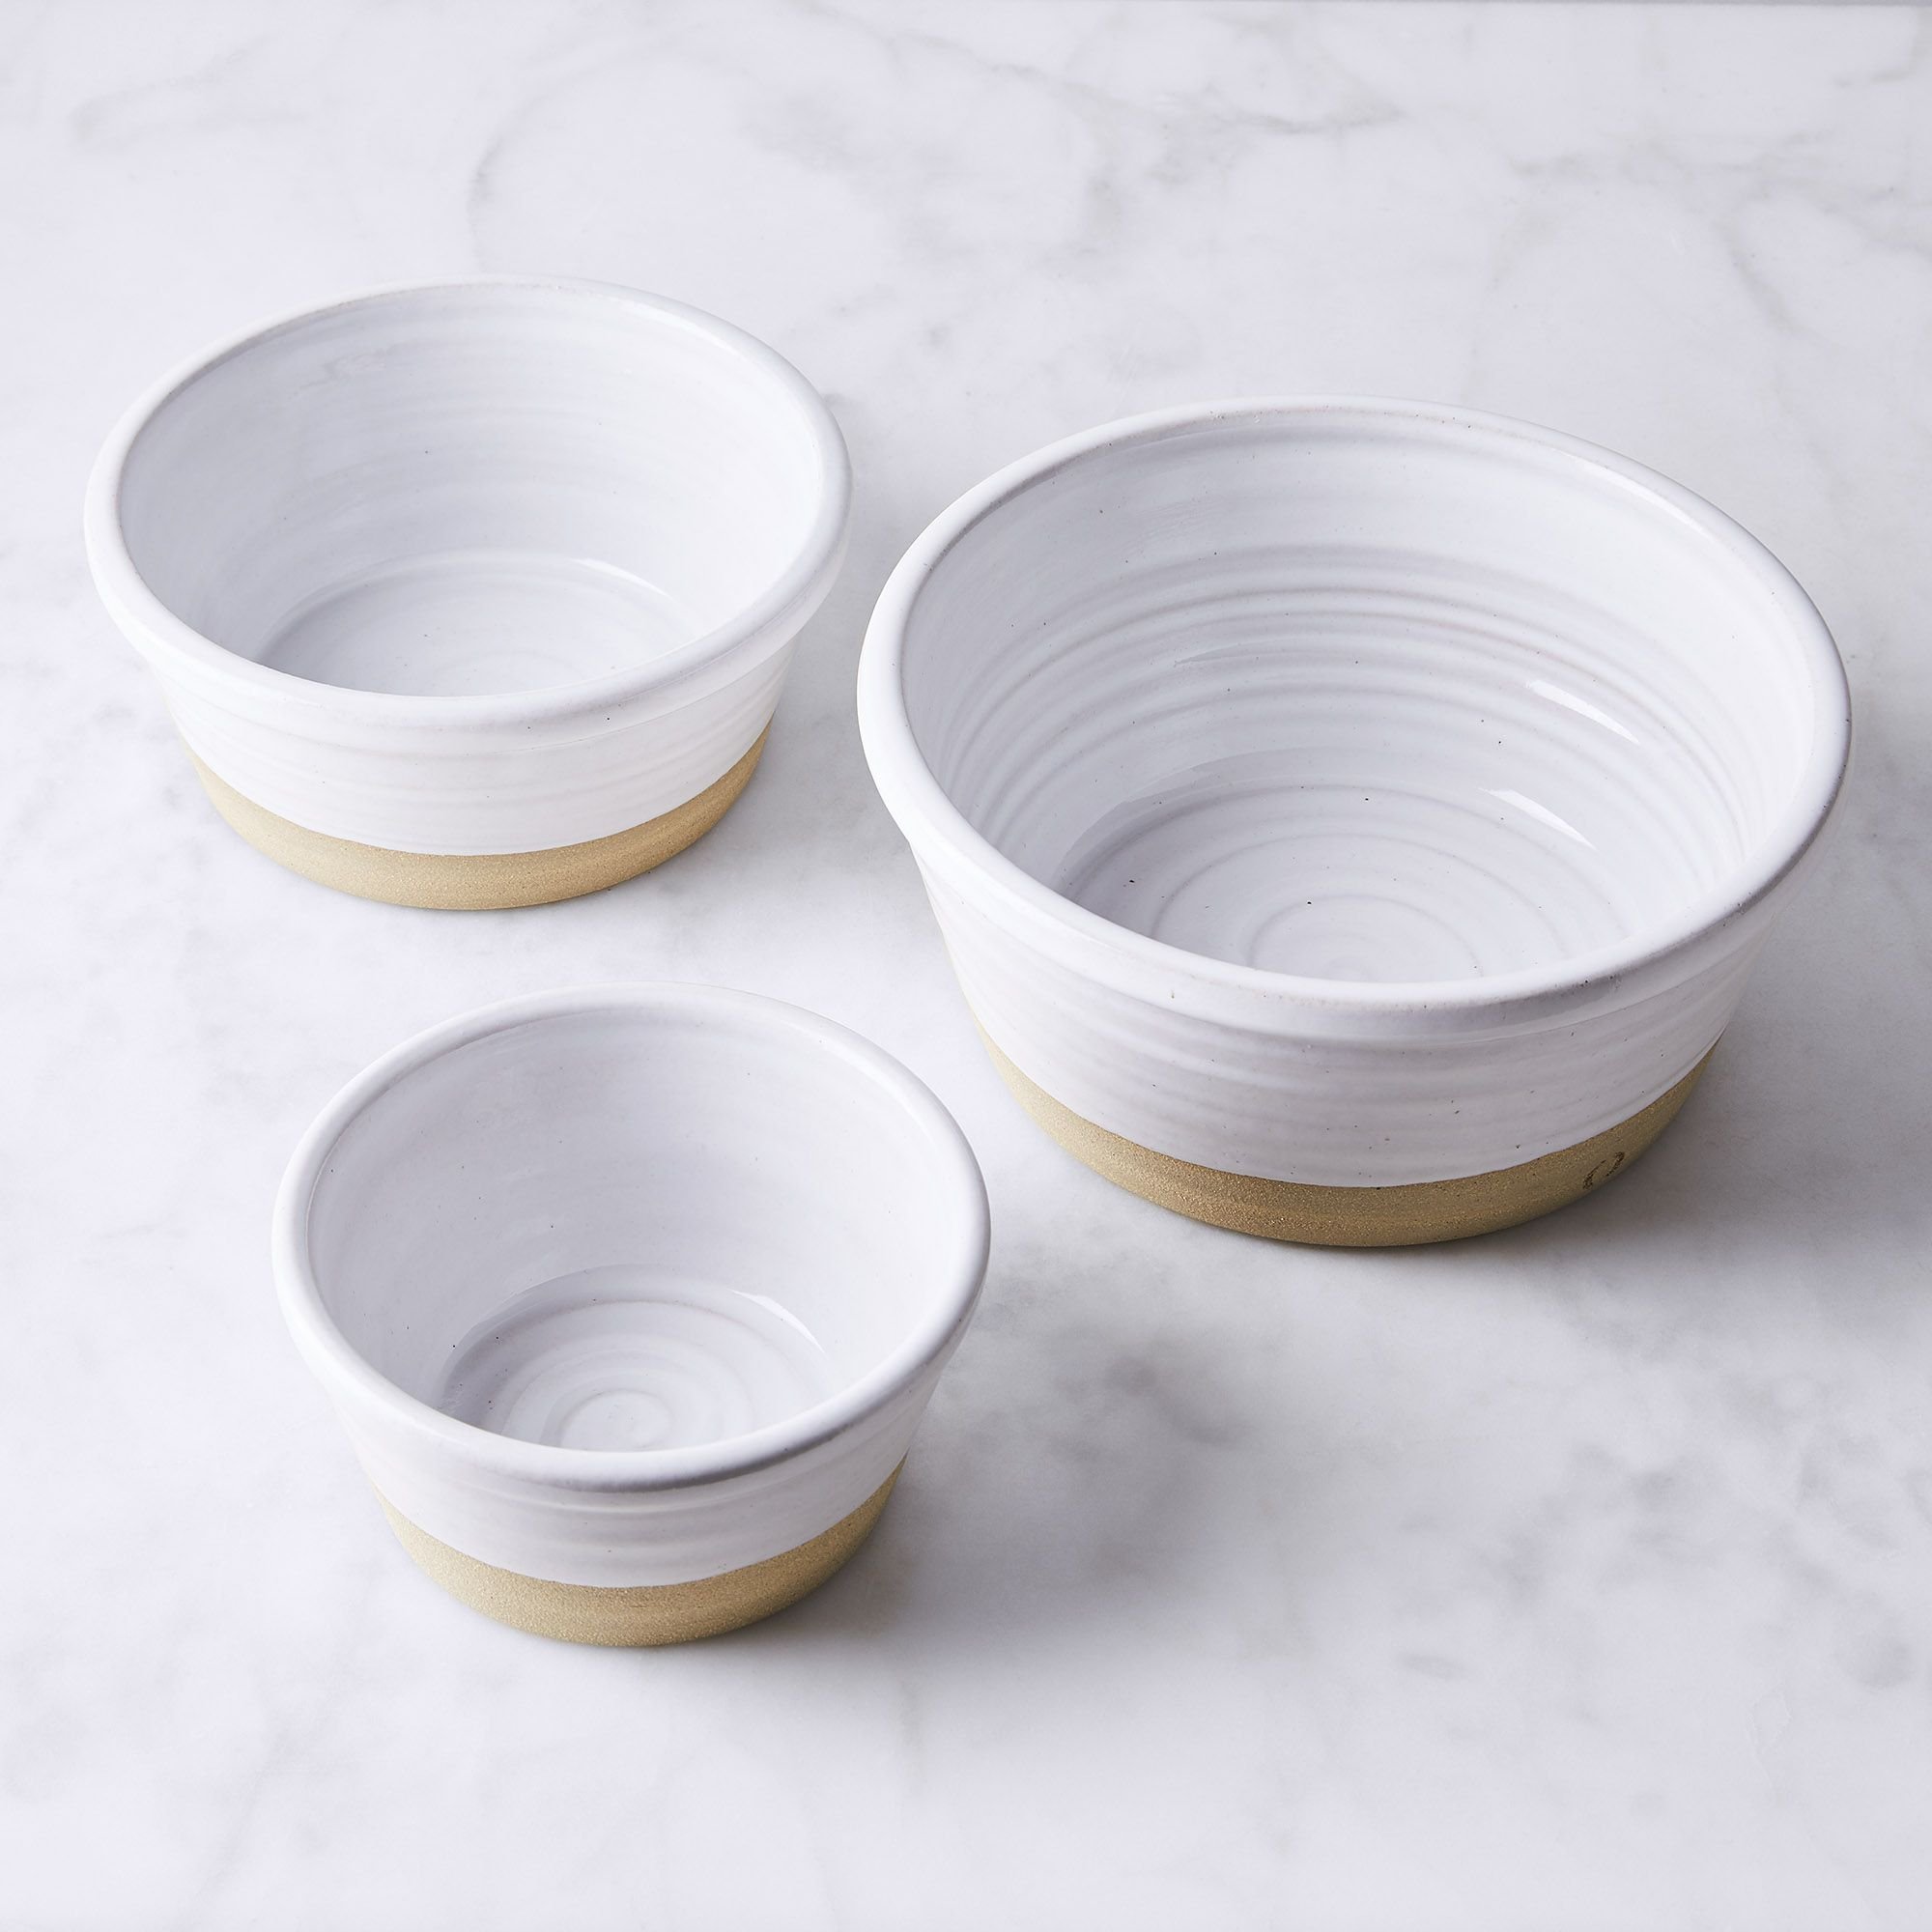 White brown ceramic dog bowls in three sizes (small, medium, large).